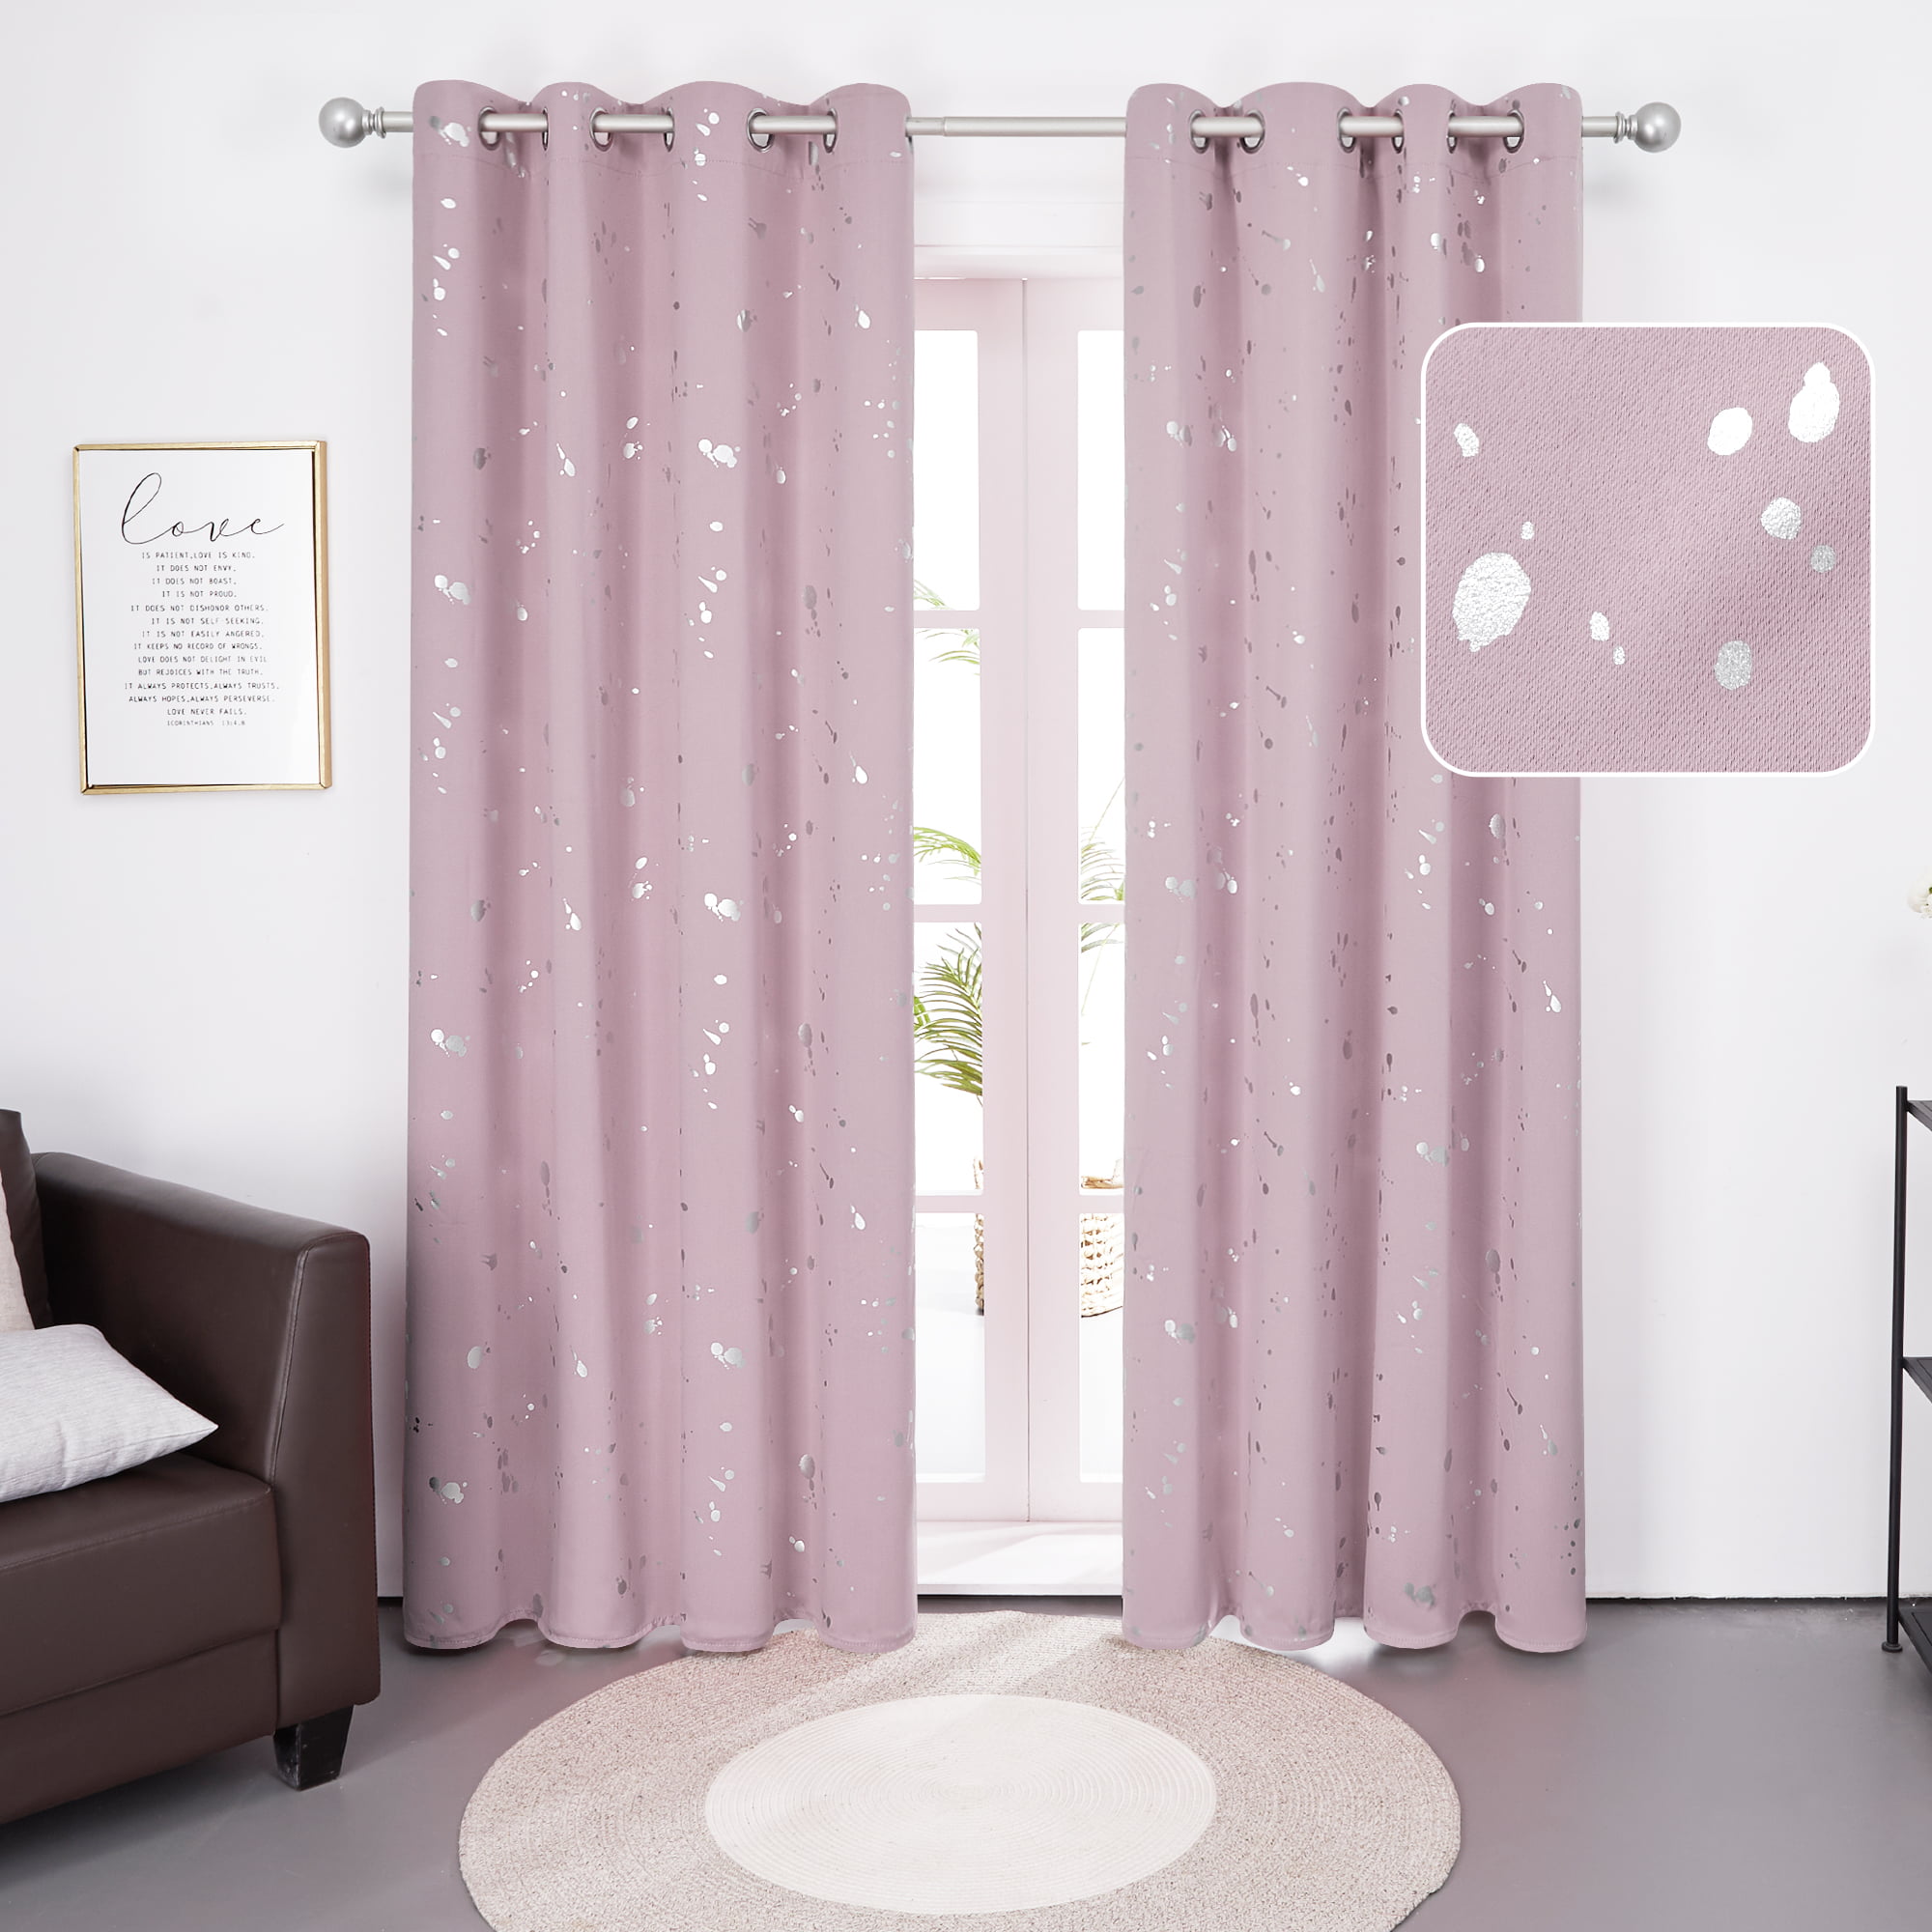 Details about   Faux Linen Blackout Curtains Pink Striped Drapes Bedroom Window Decoration Panel 